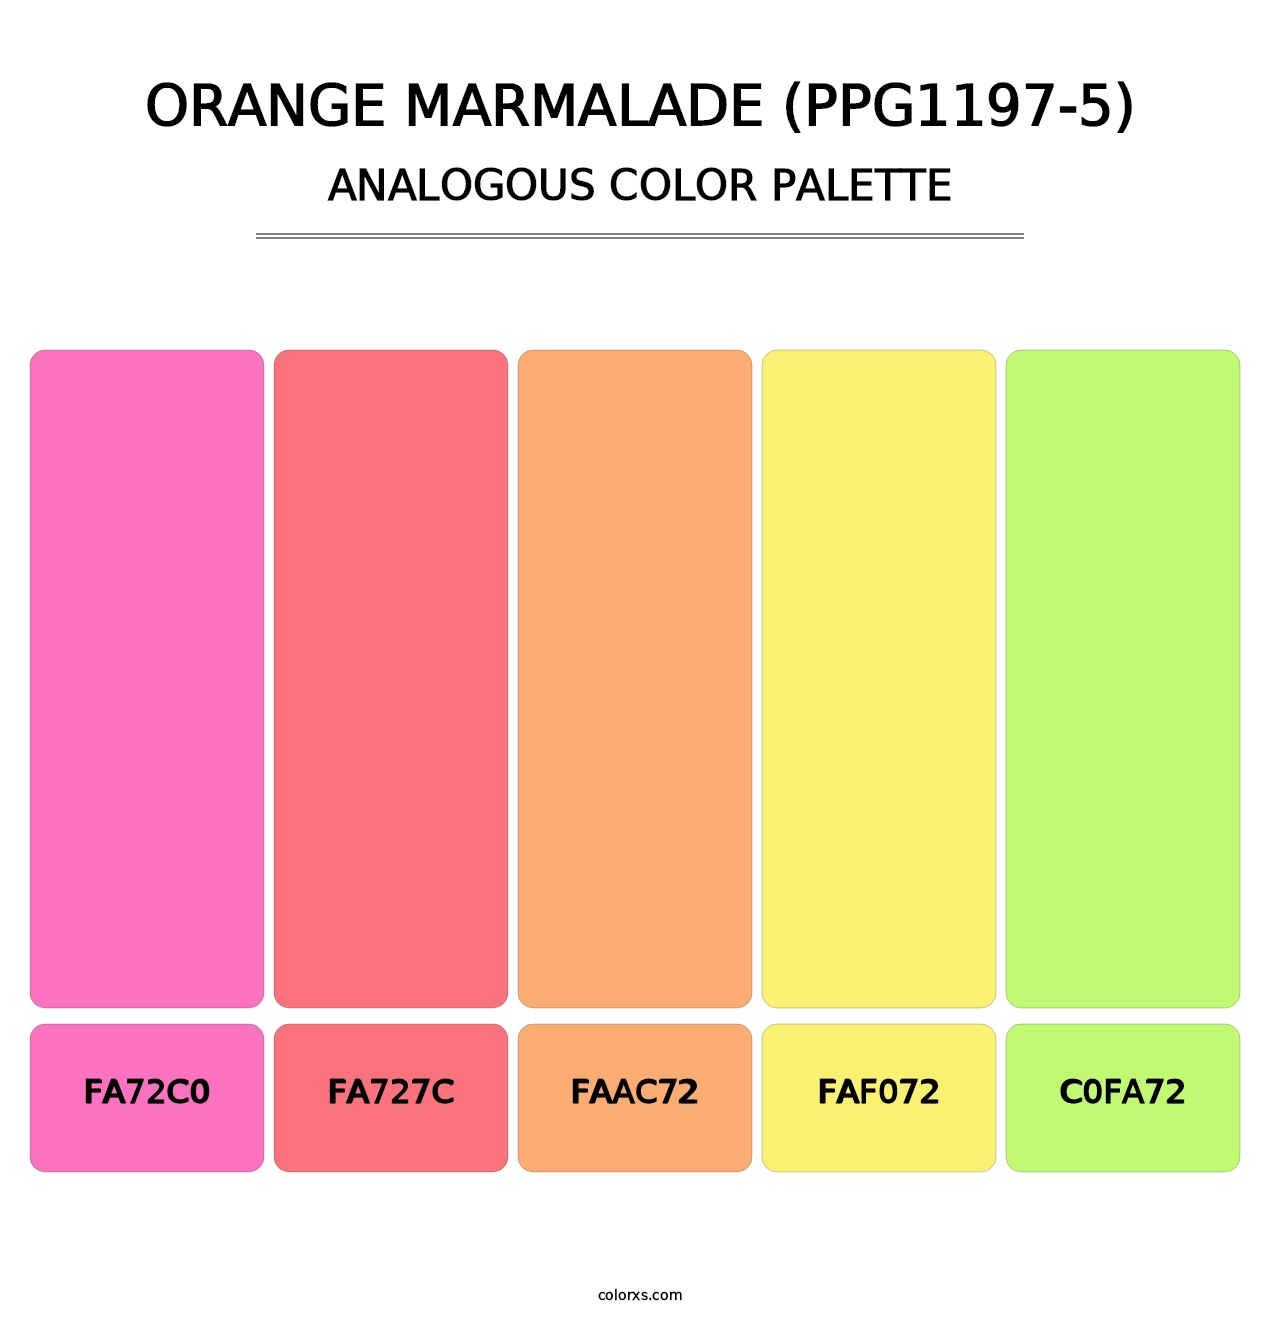 Orange Marmalade (PPG1197-5) - Analogous Color Palette